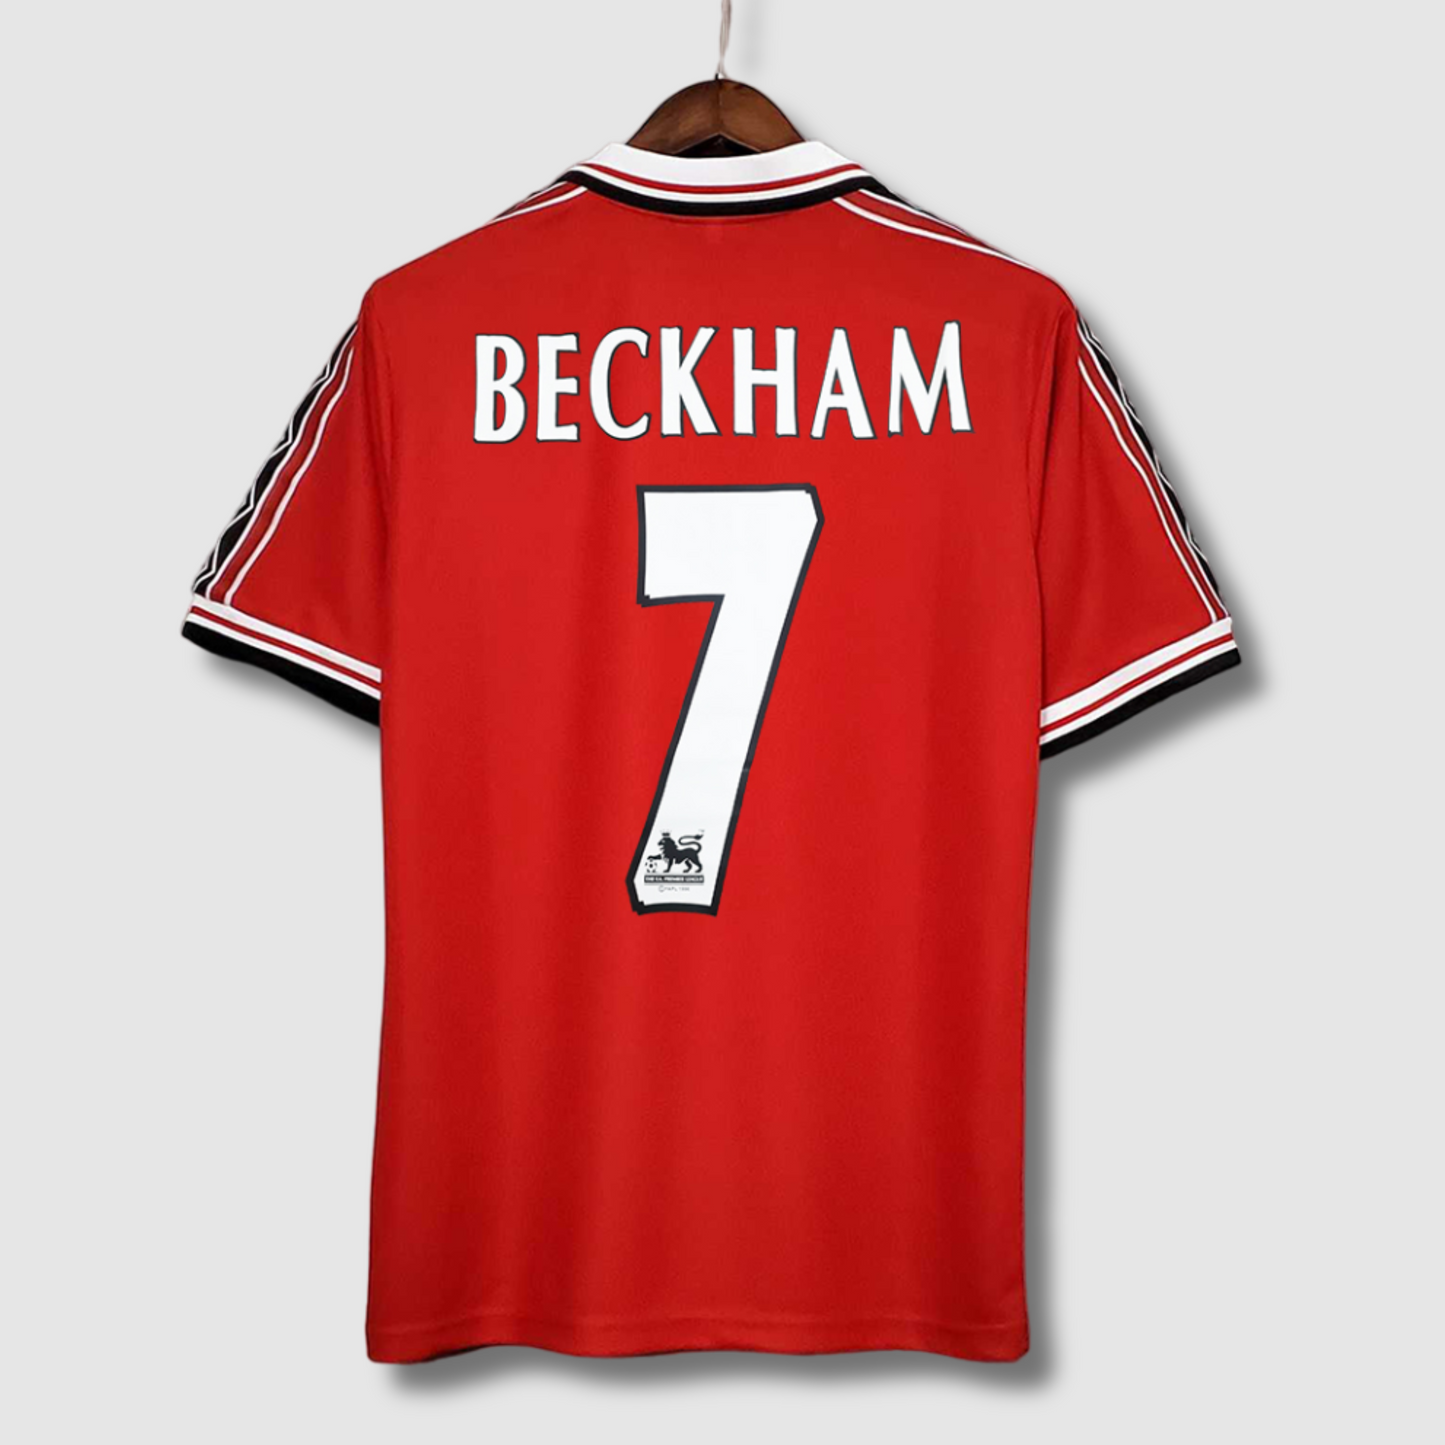 Beckham Retro Jersey Bundle